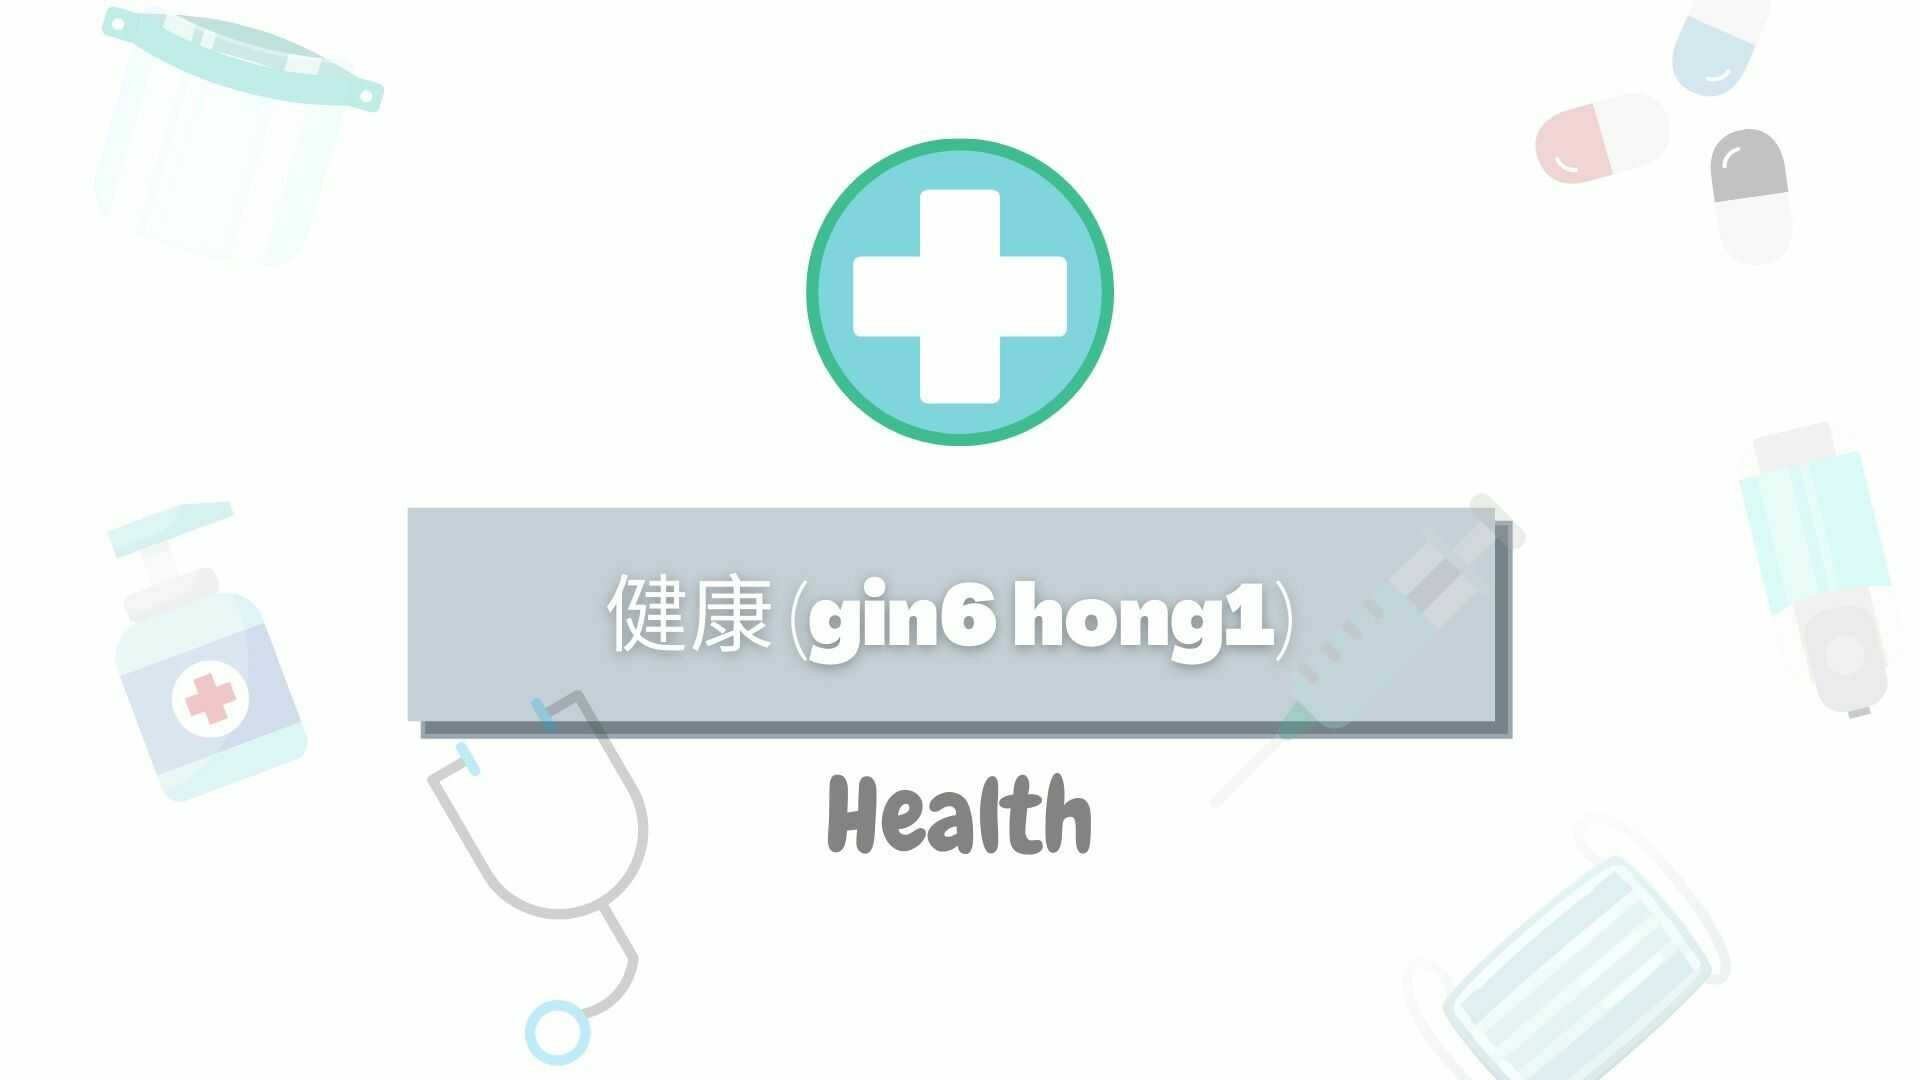 Health in Cantonese
